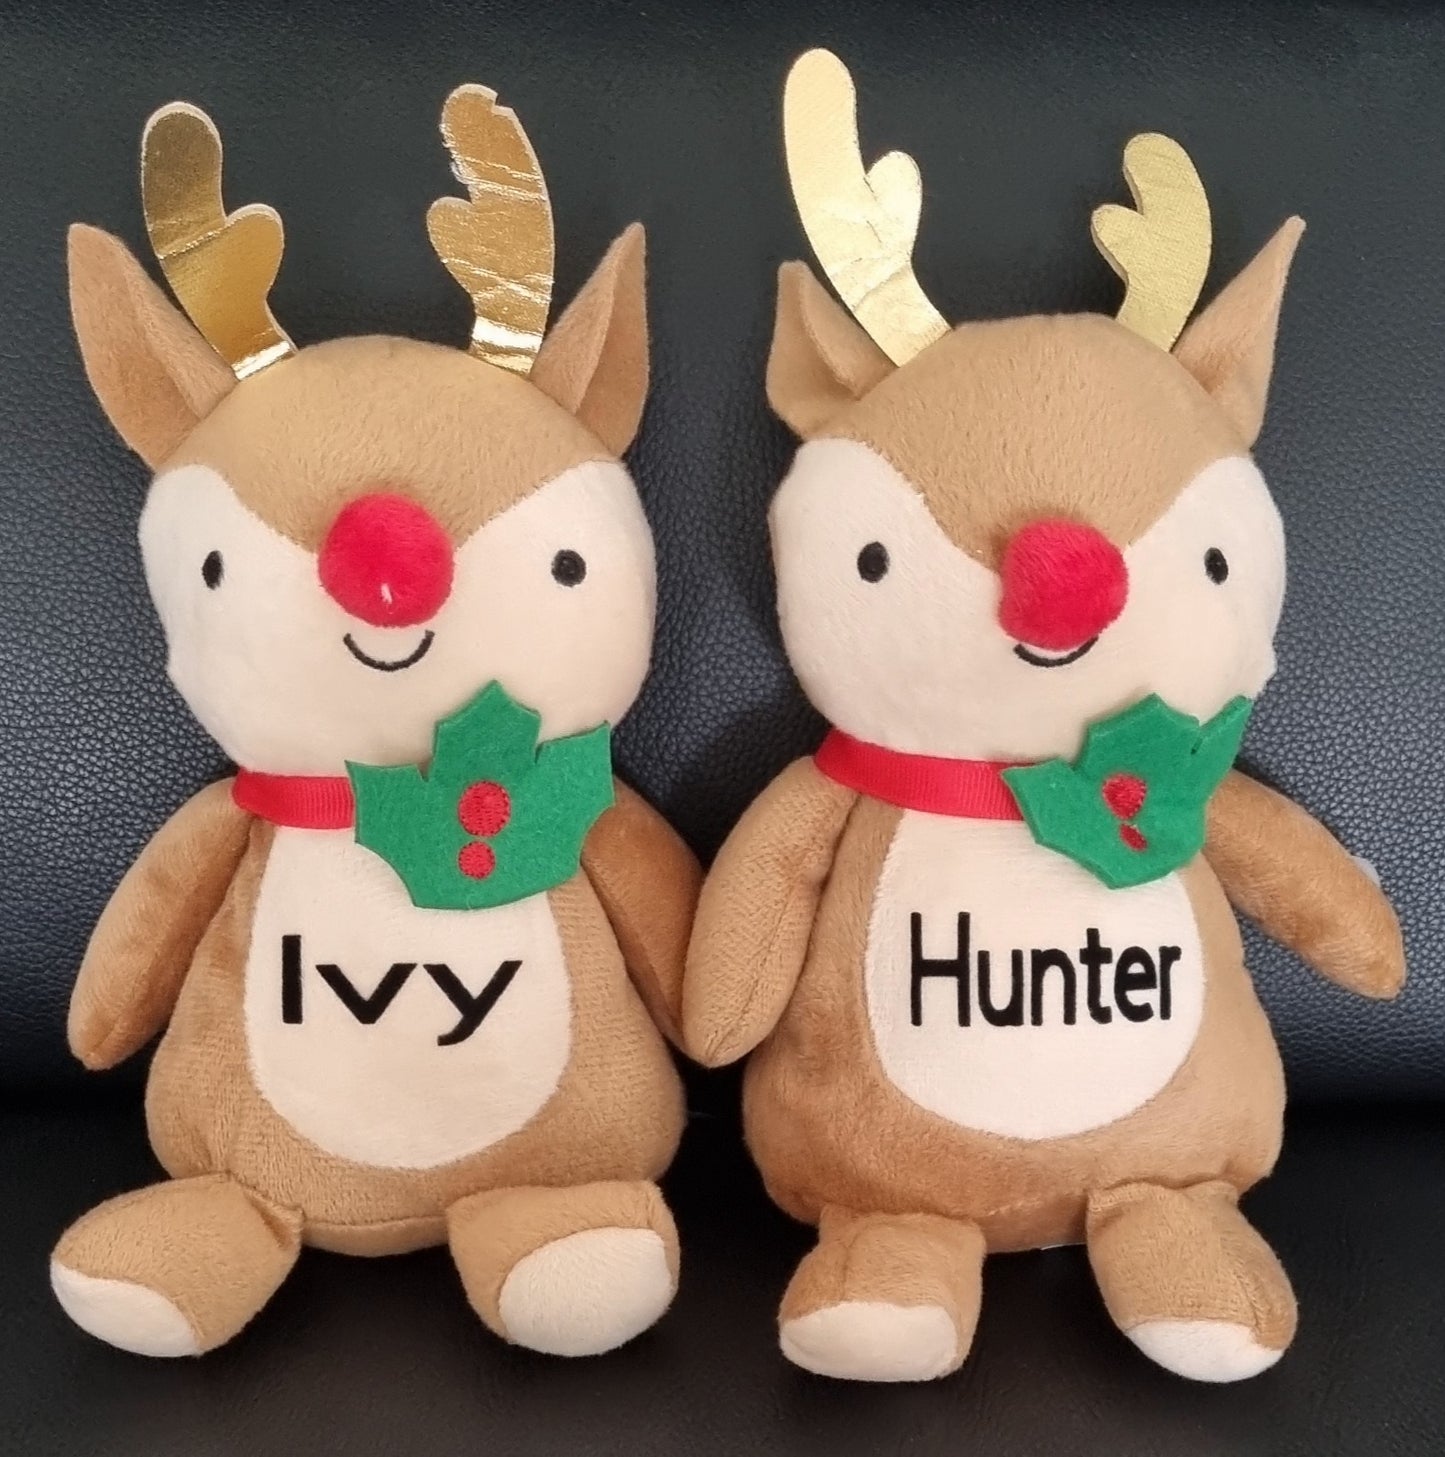 Personalised reindeer with gift bag set